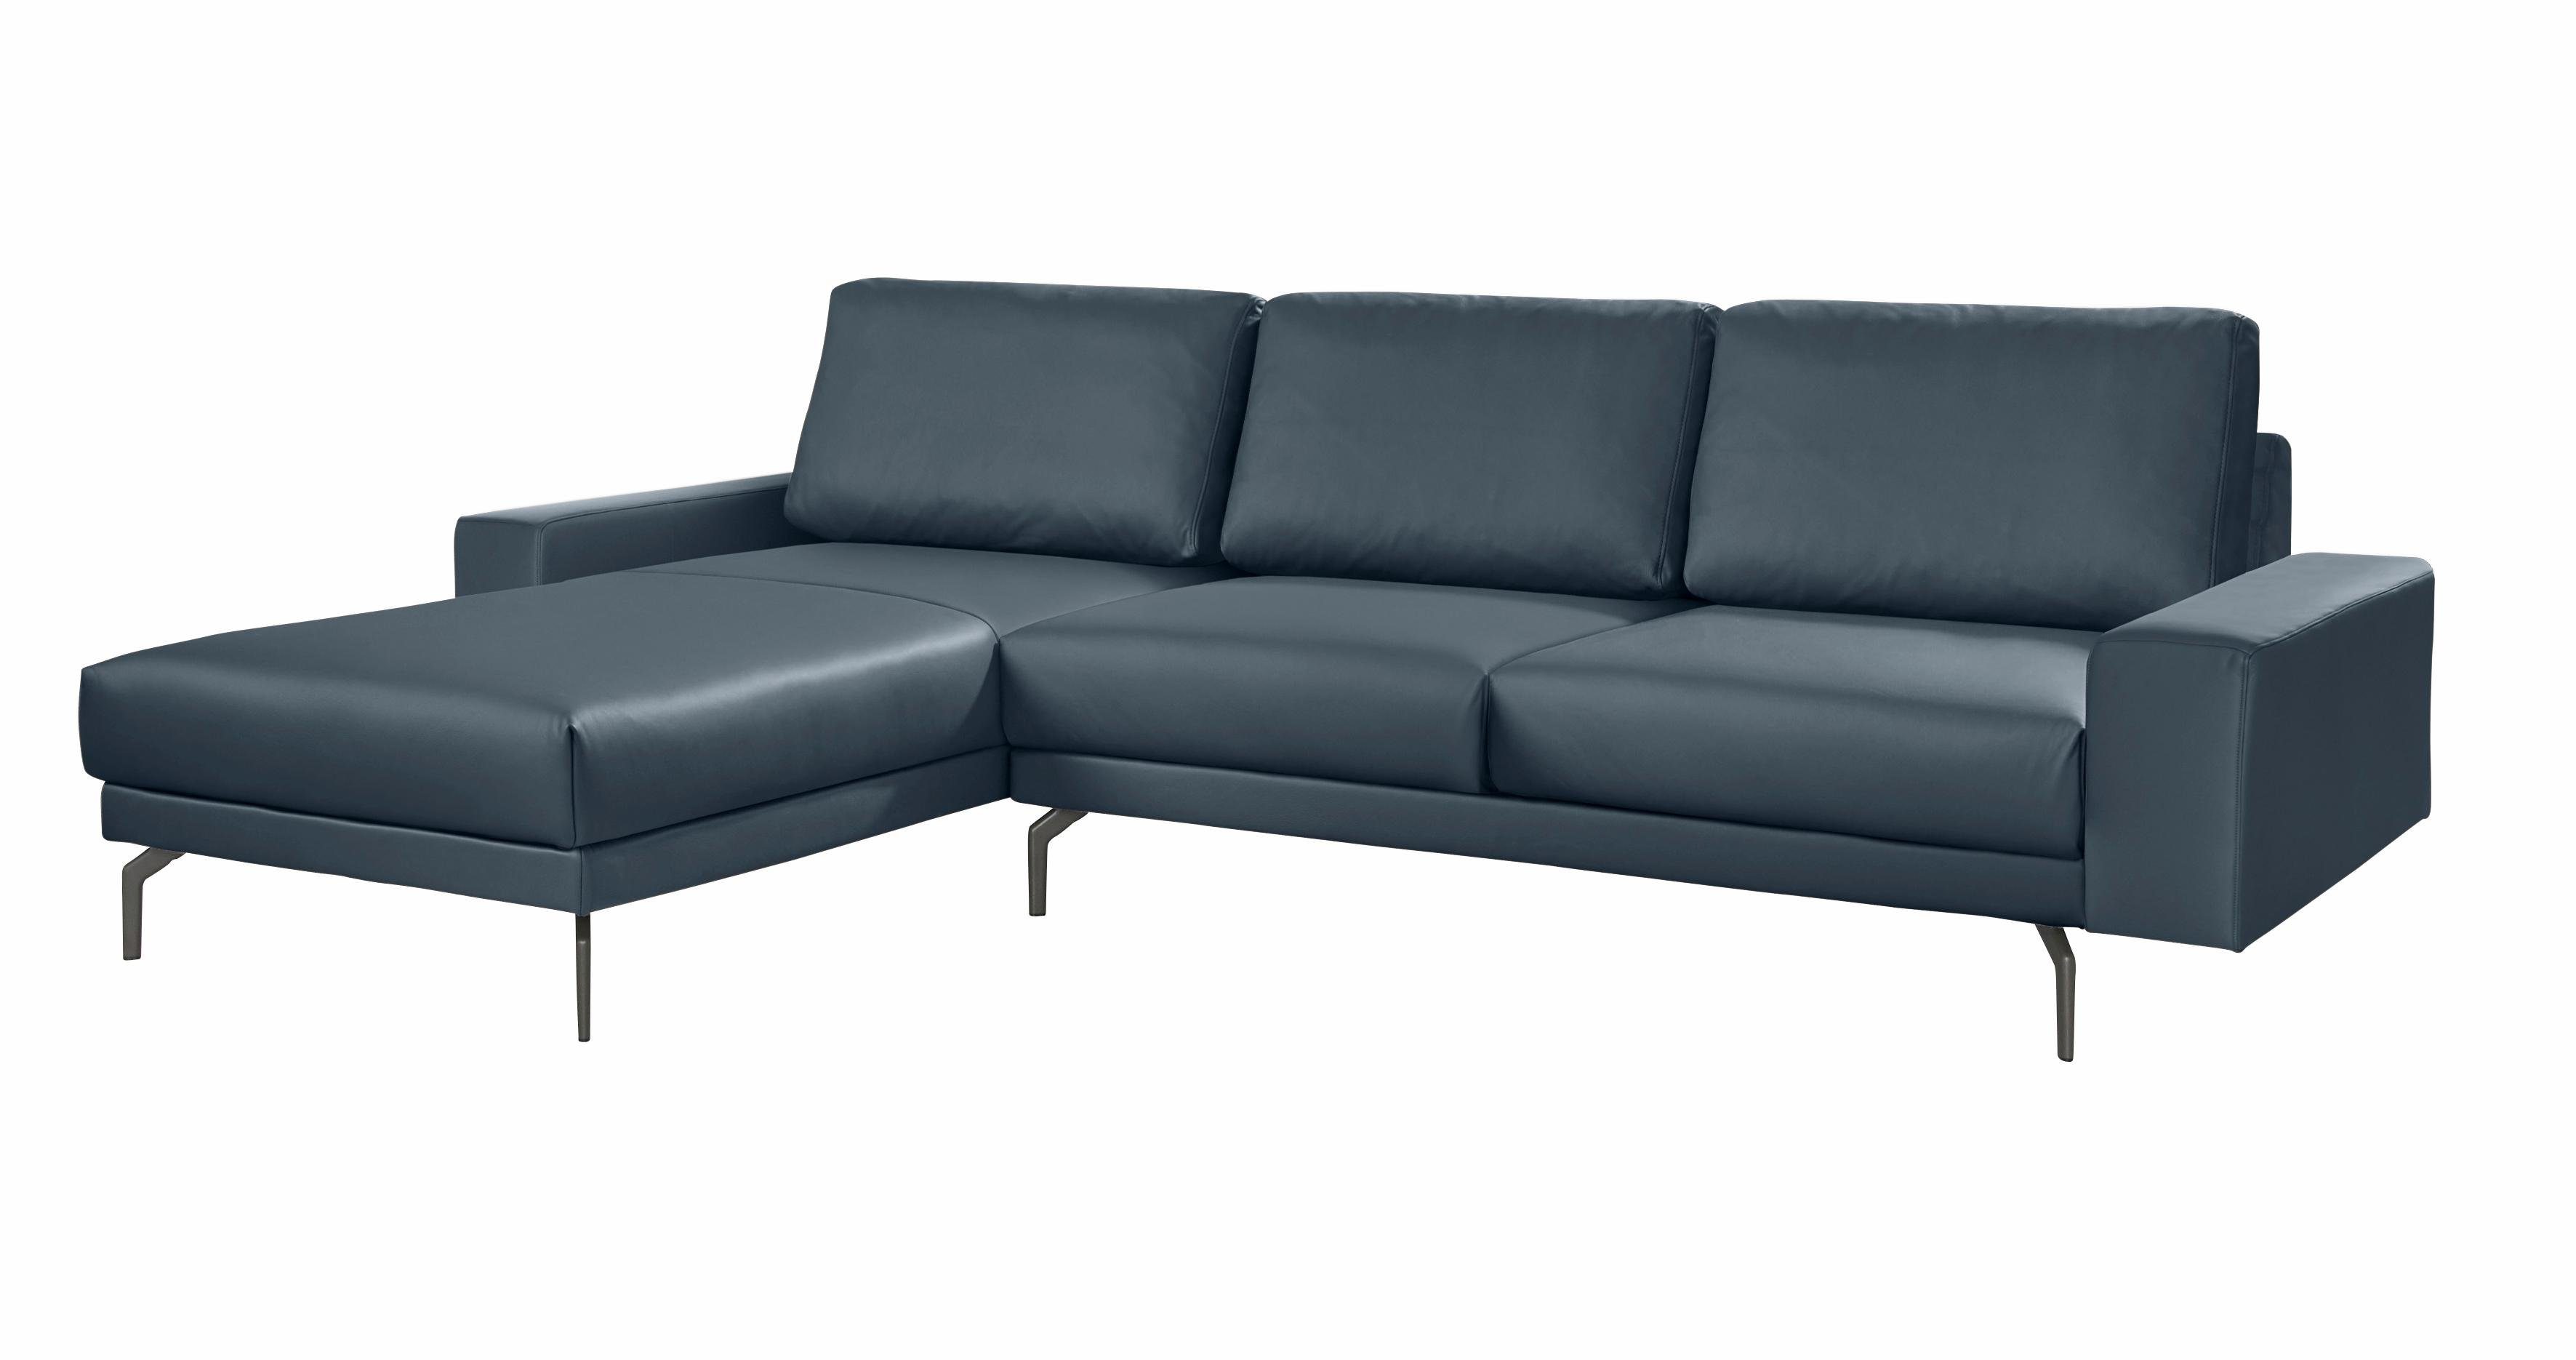 Alugussfüße umbragrau, Breite hs.450, Armlehne Ecksofa niedrig, und hülsta in cm 294 breit sofa